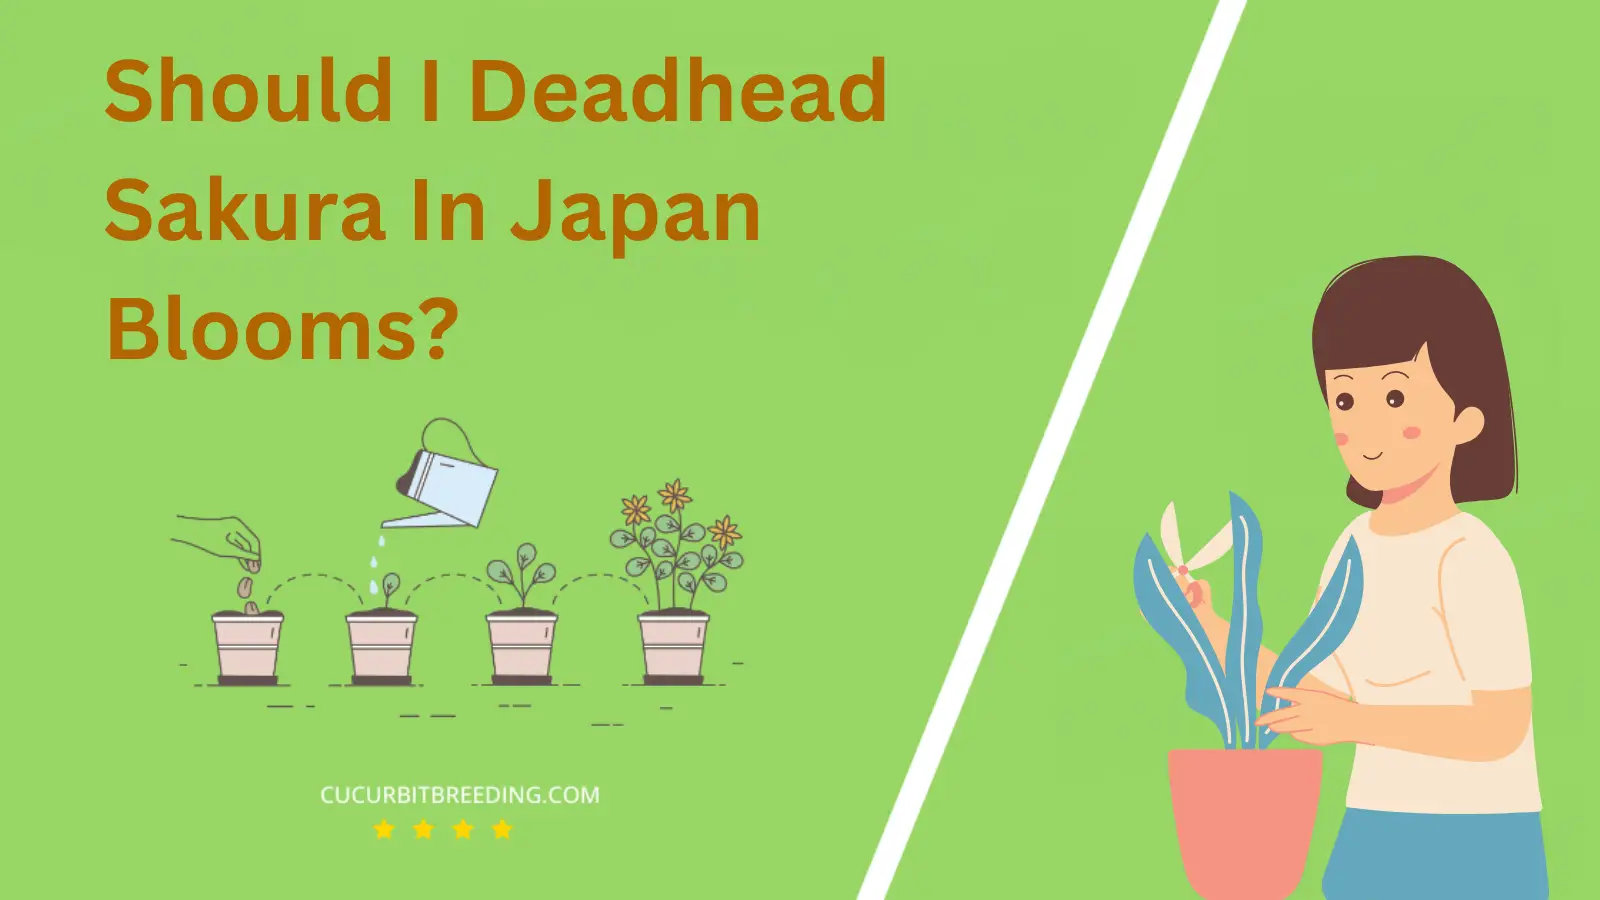 Should I Deadhead Sakura In Japan Blooms?